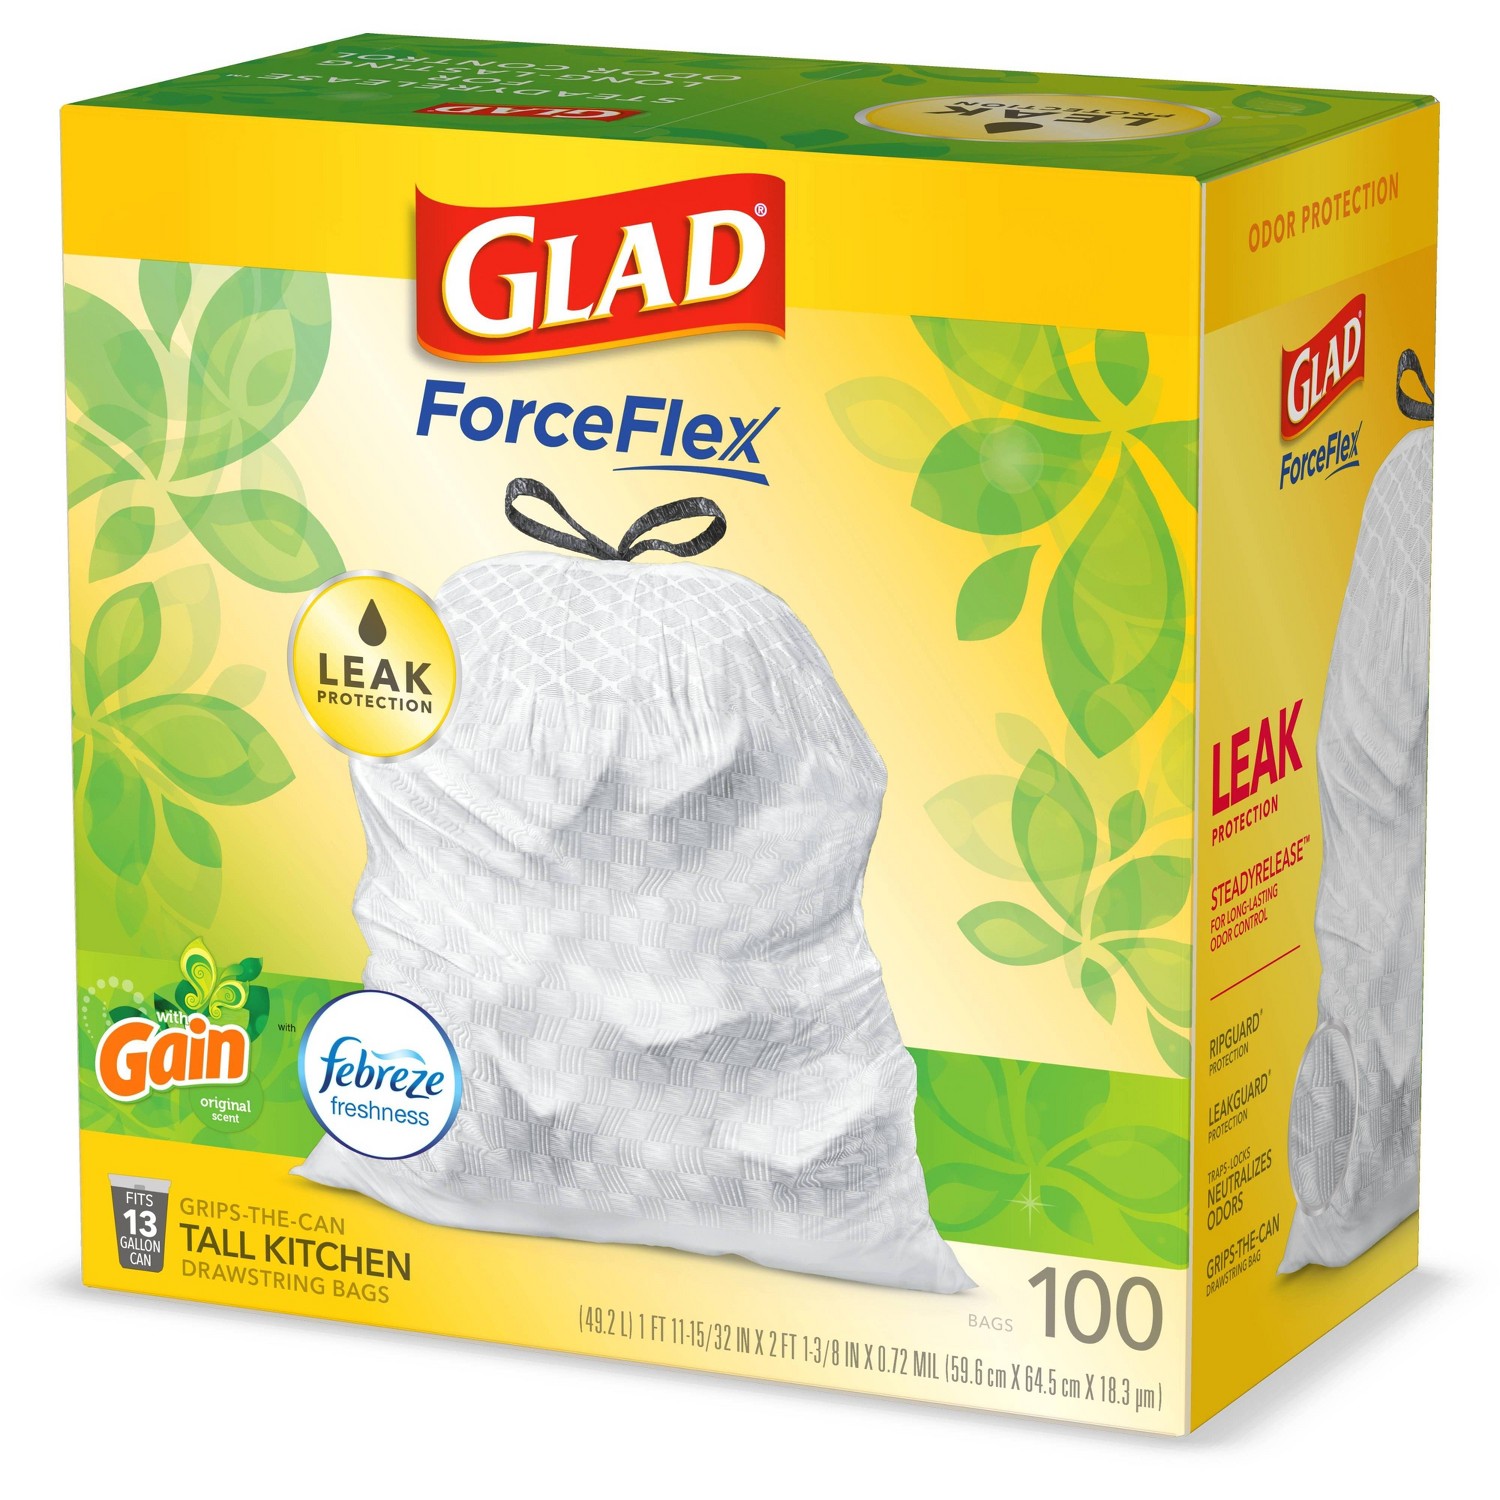 Glad 200ct 13G Original Gain Trash Bags - Bundle $32.49